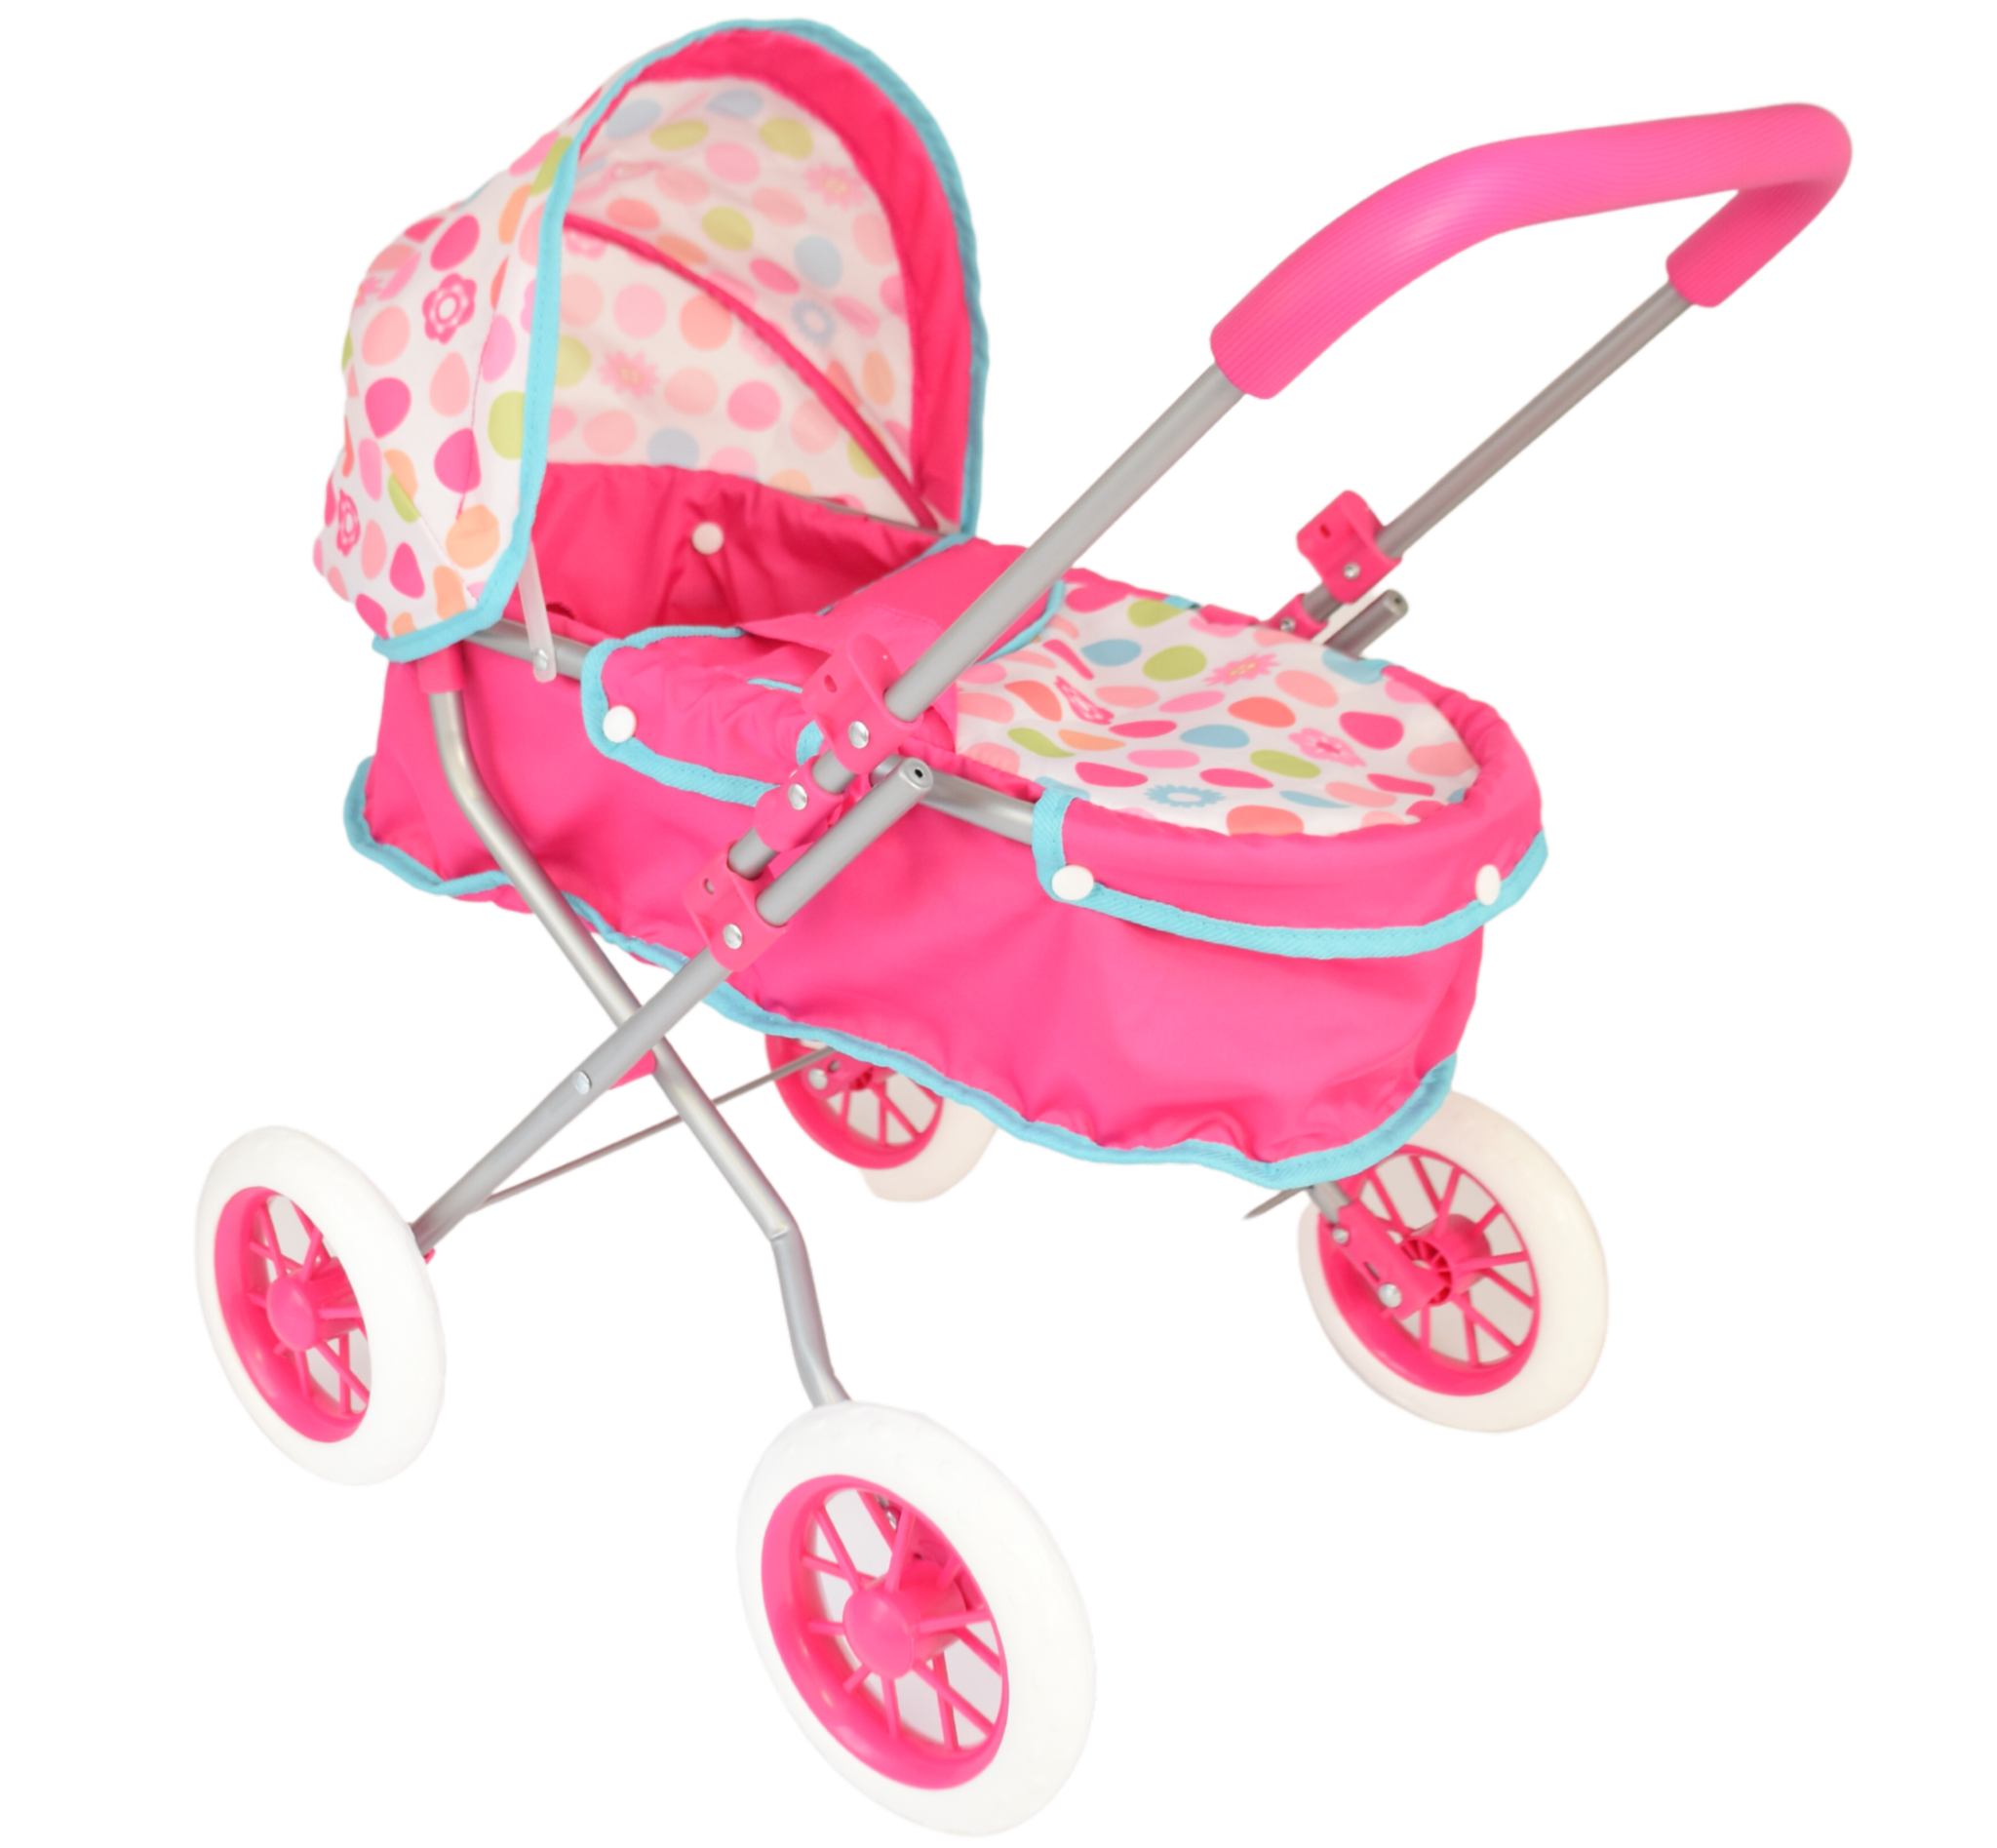 KOOKAMUNGA KIDS Baby Doll Stroller - Realistic 2 in 1 Baby Stroller for Dolls w/Detachable Bassinet